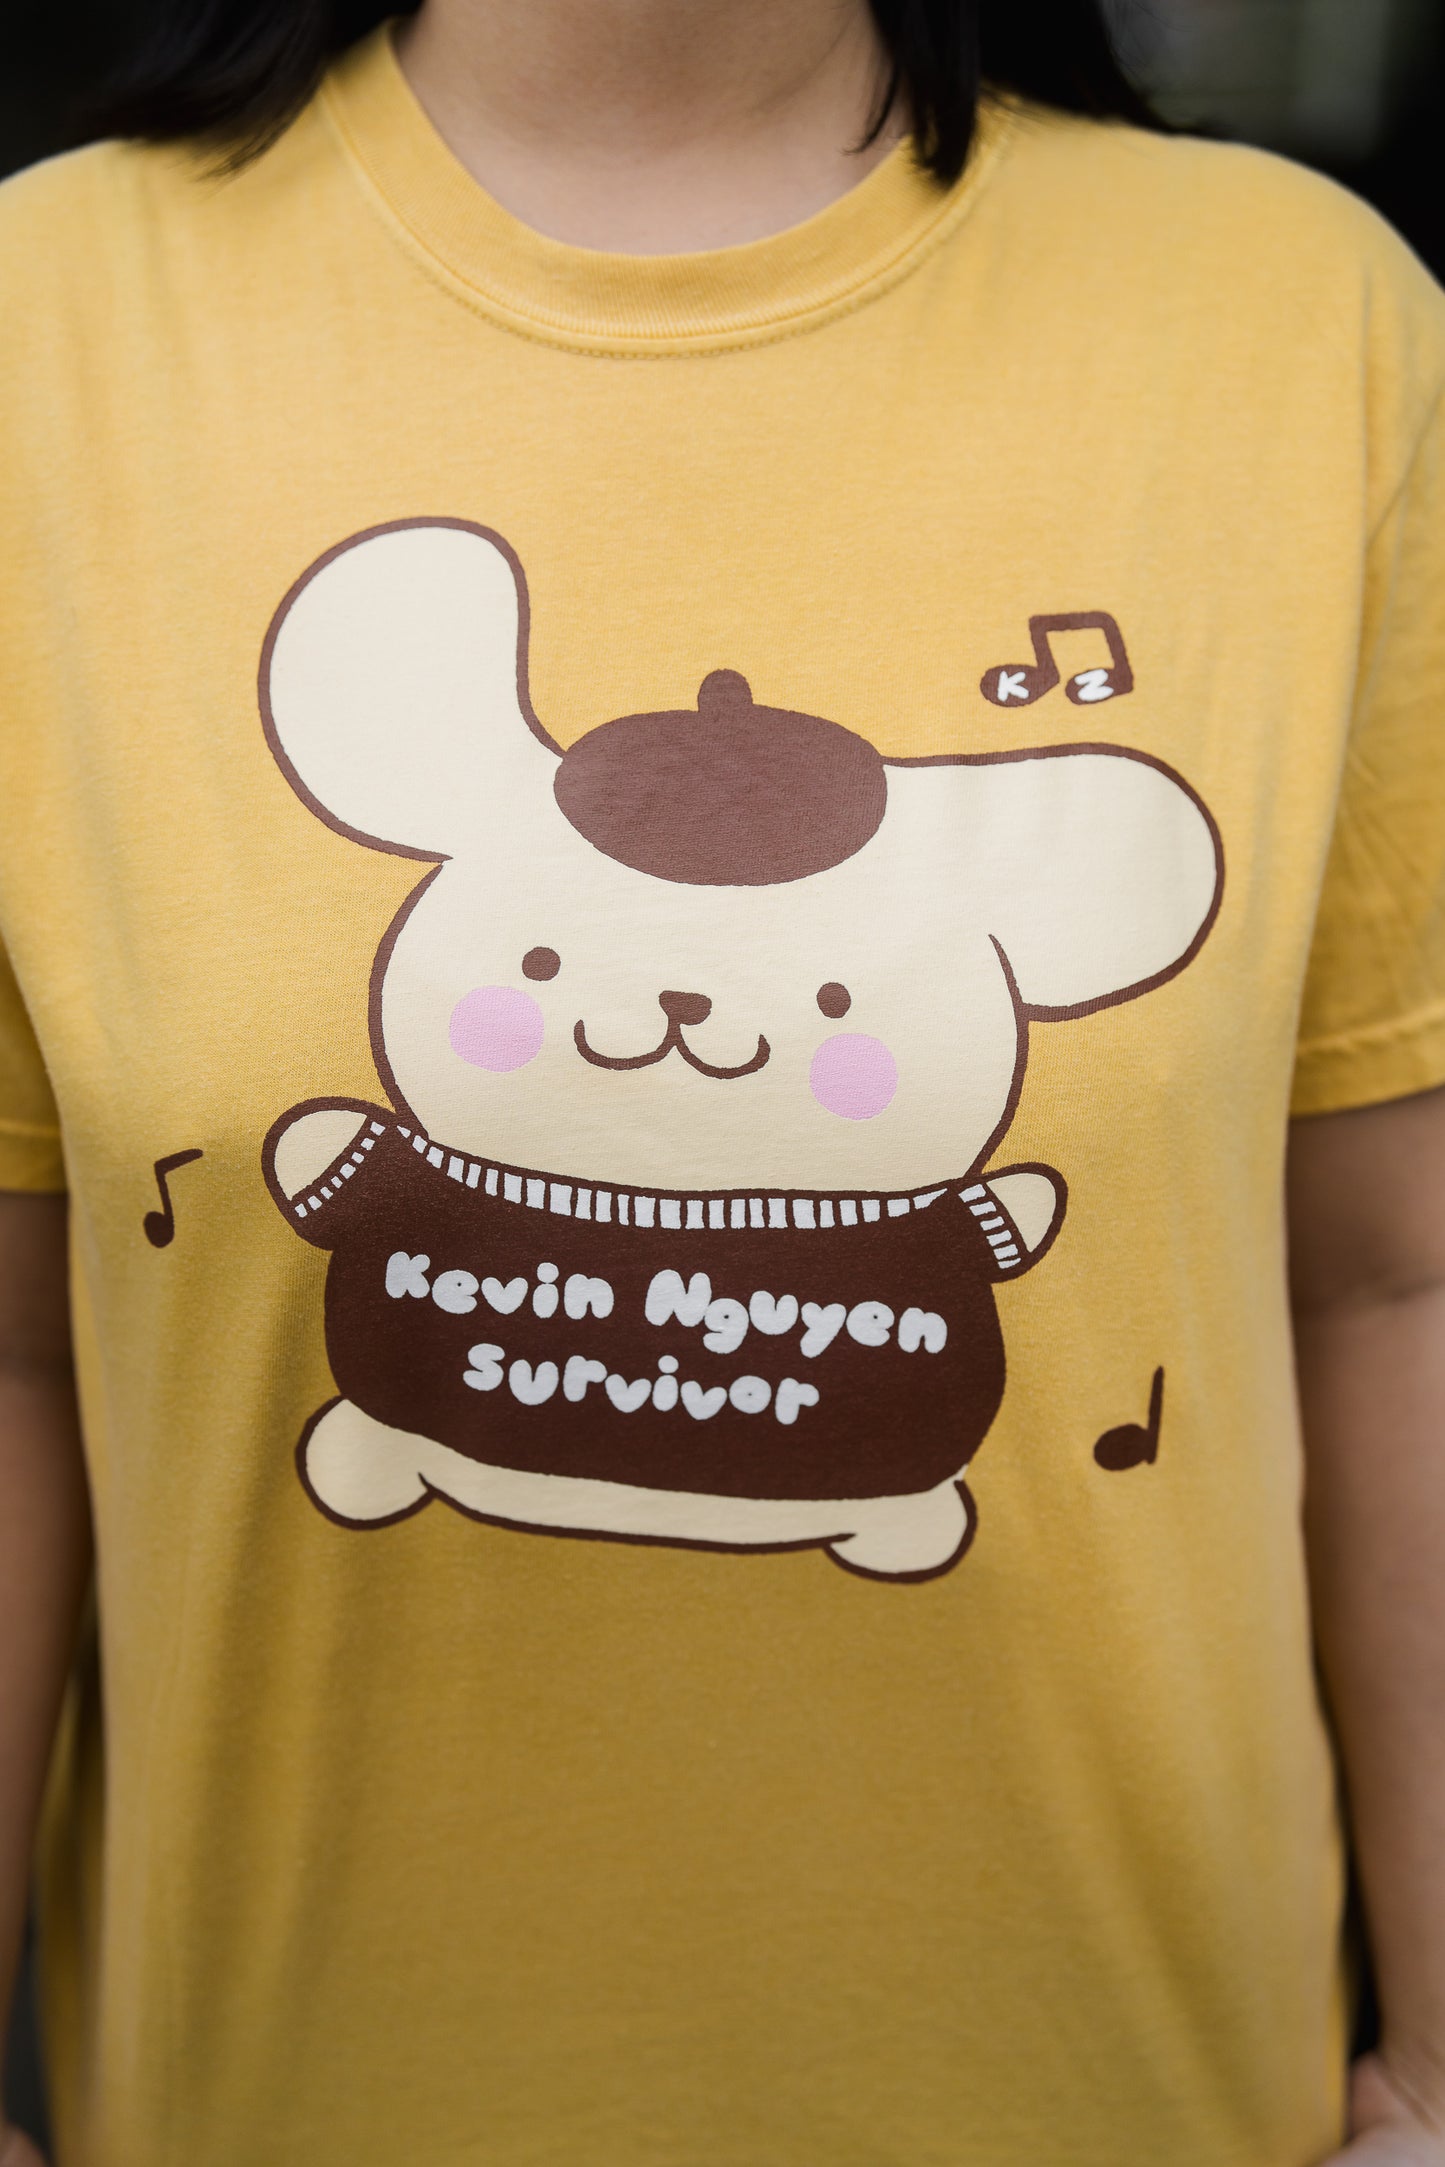 Kevin Nguyen survivor shirt (mustard)